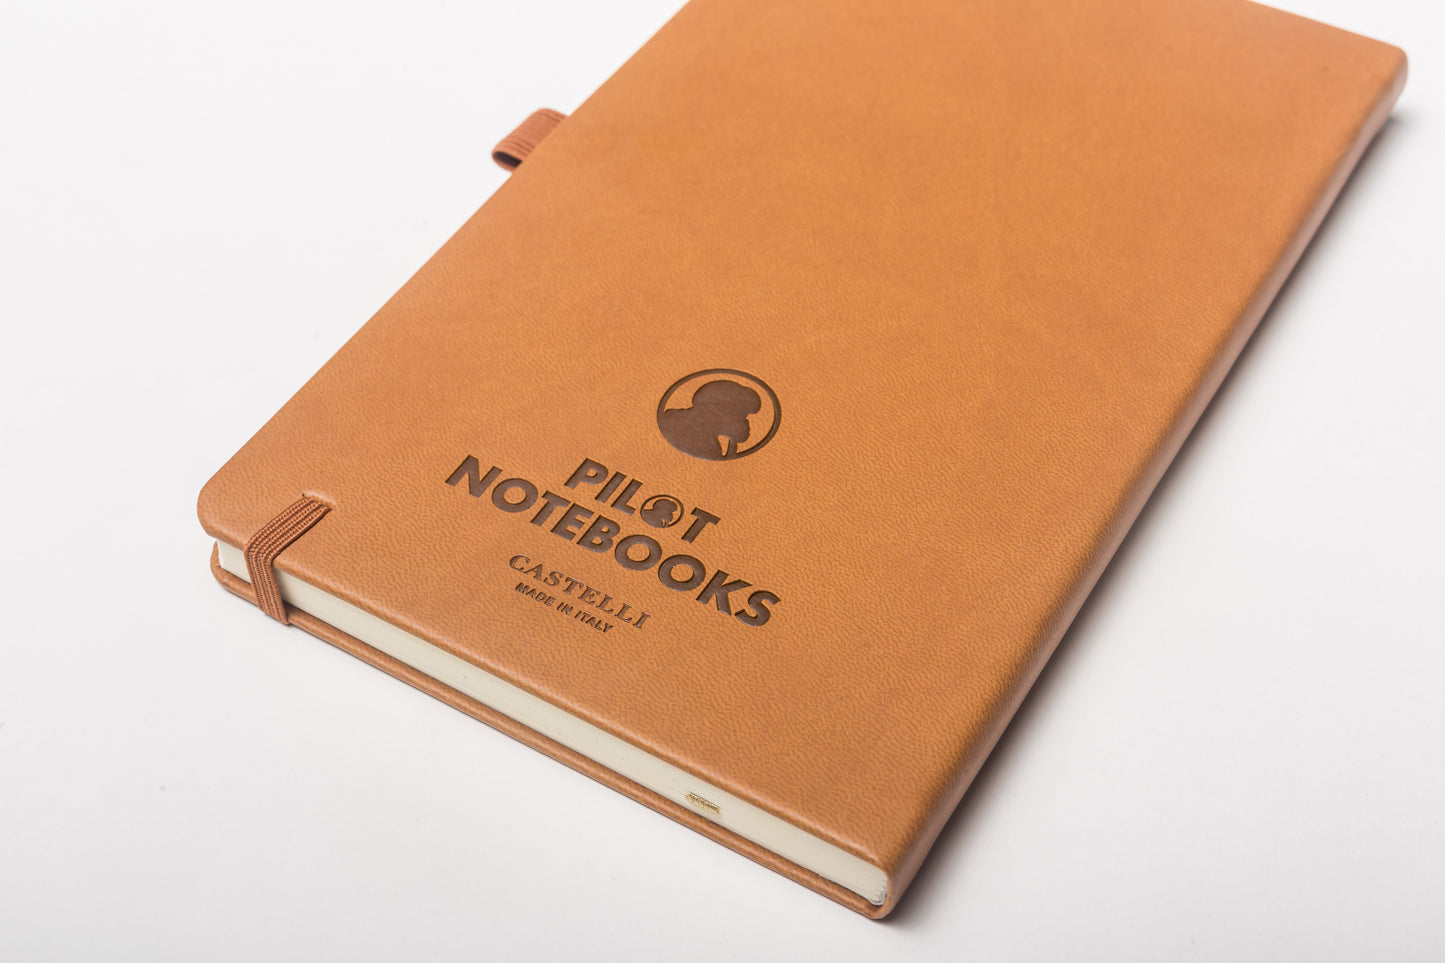 Pilot Notebooks - Spitfire